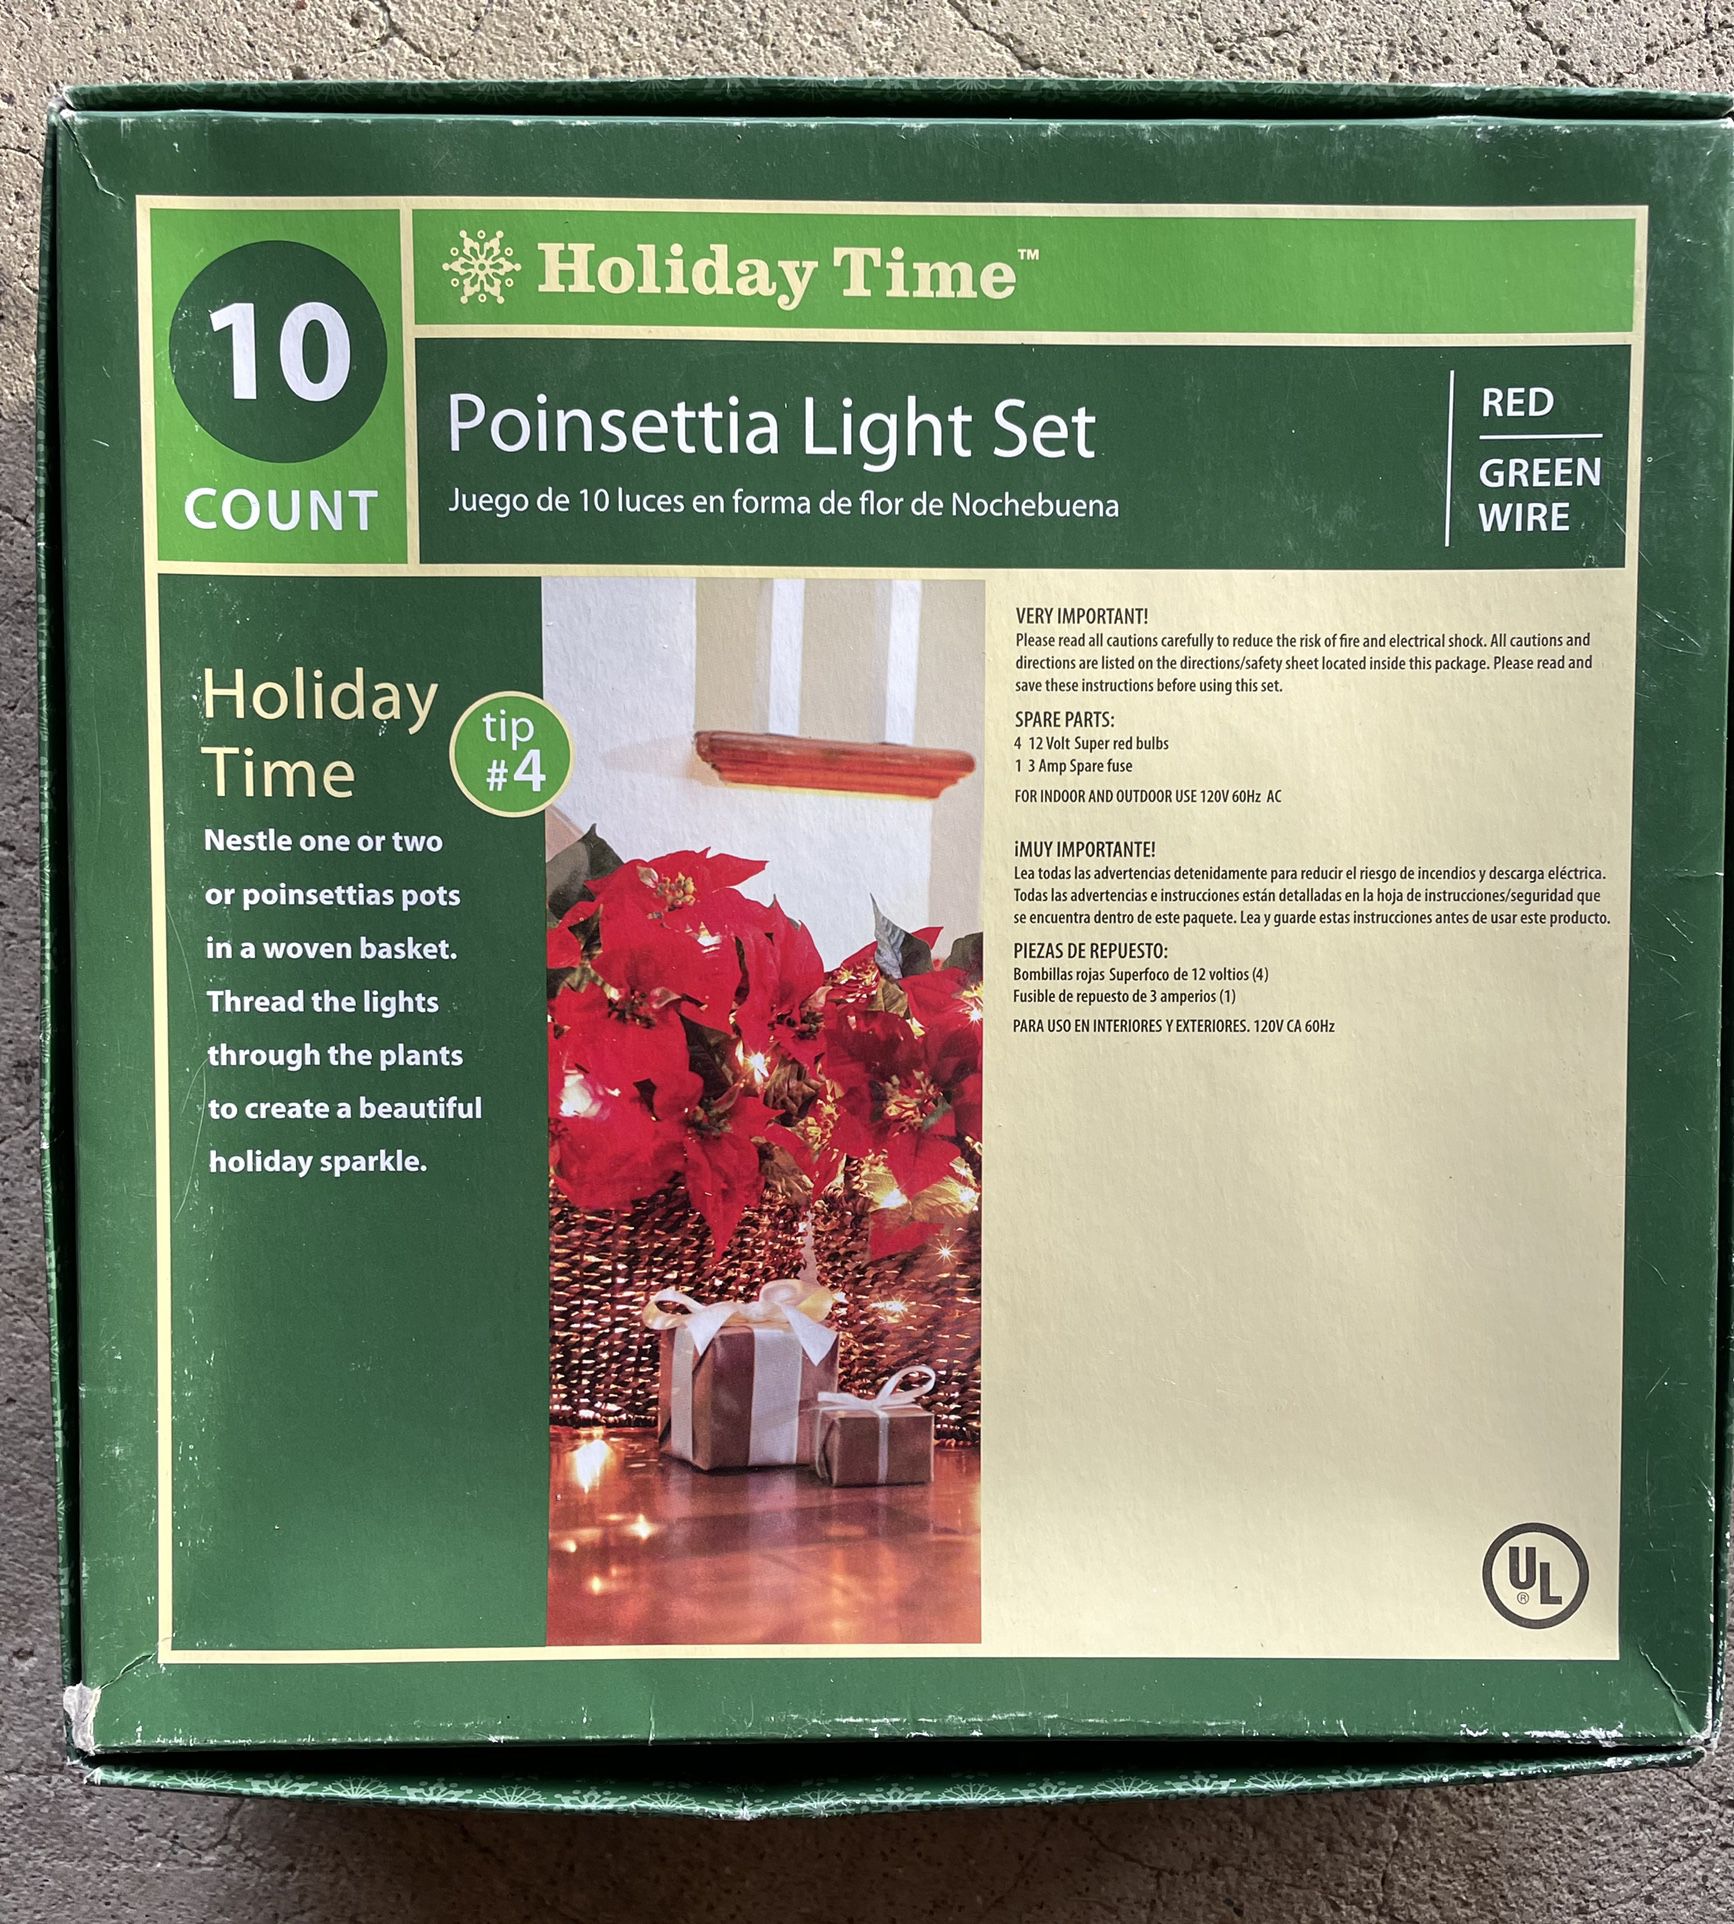 Poinsettia Light Set 10 count